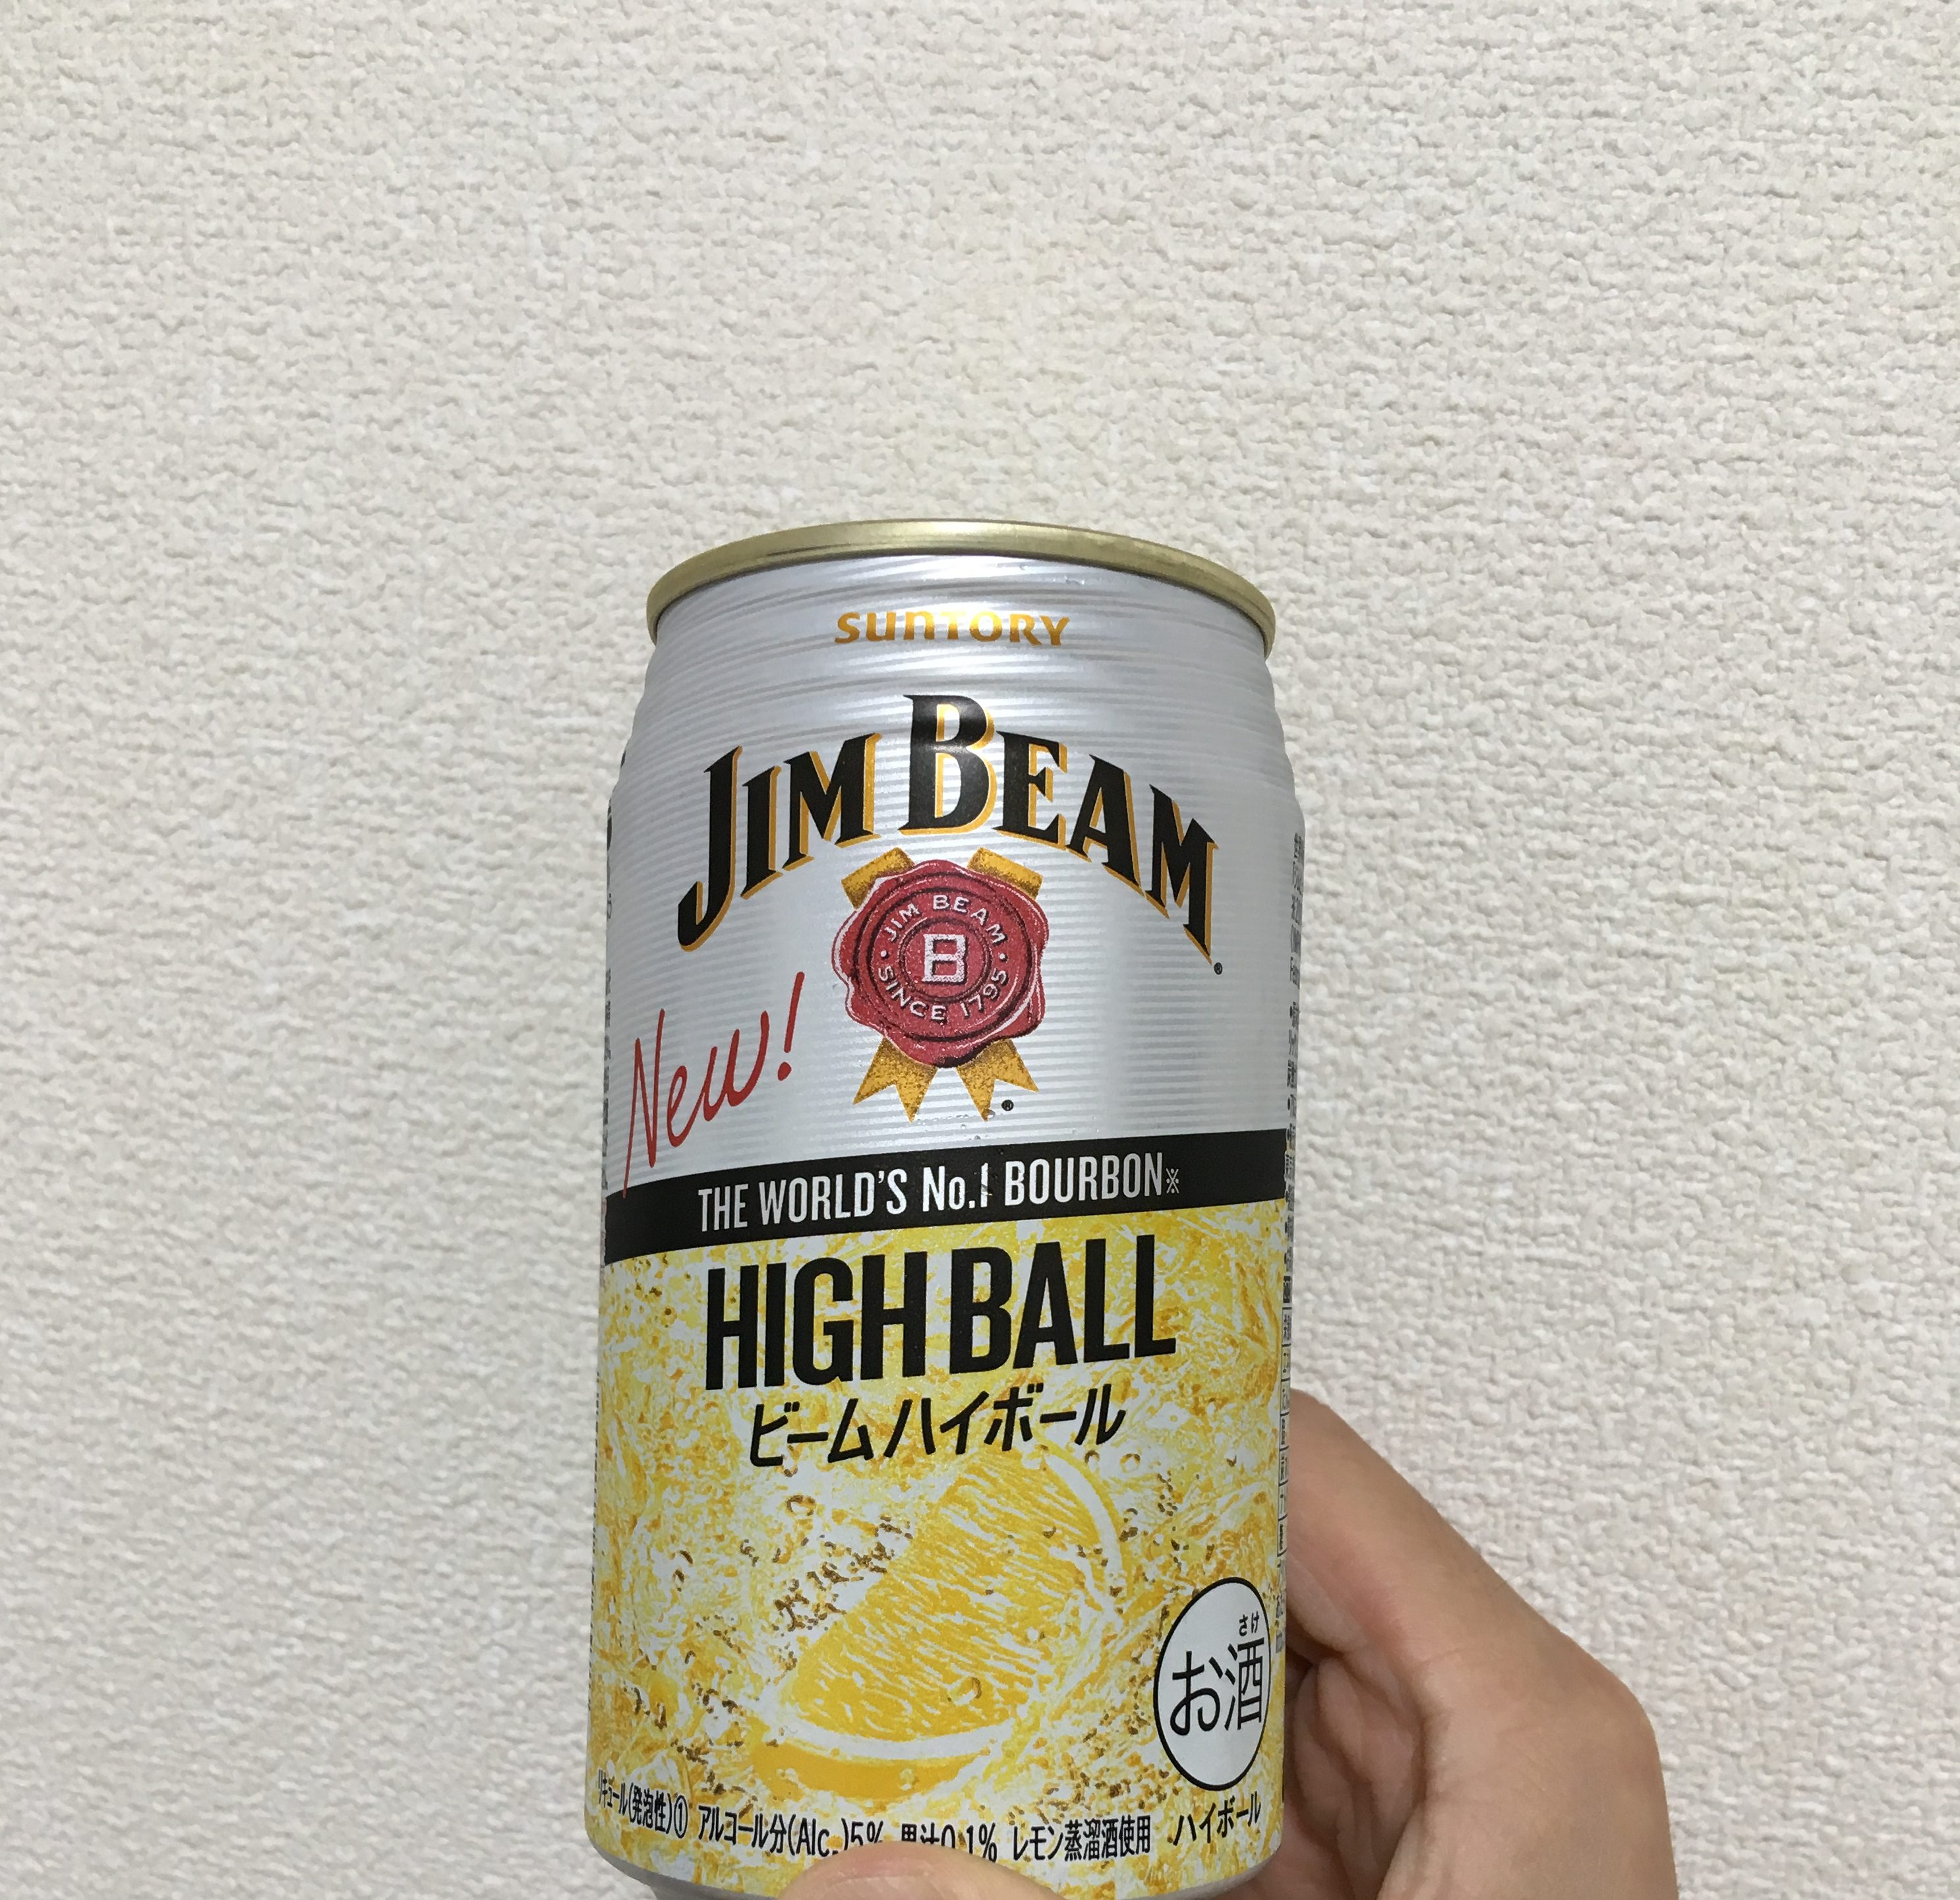 【JIM BEAM】ハイボールはアルコールが低くて飲みやすい【レビュー】